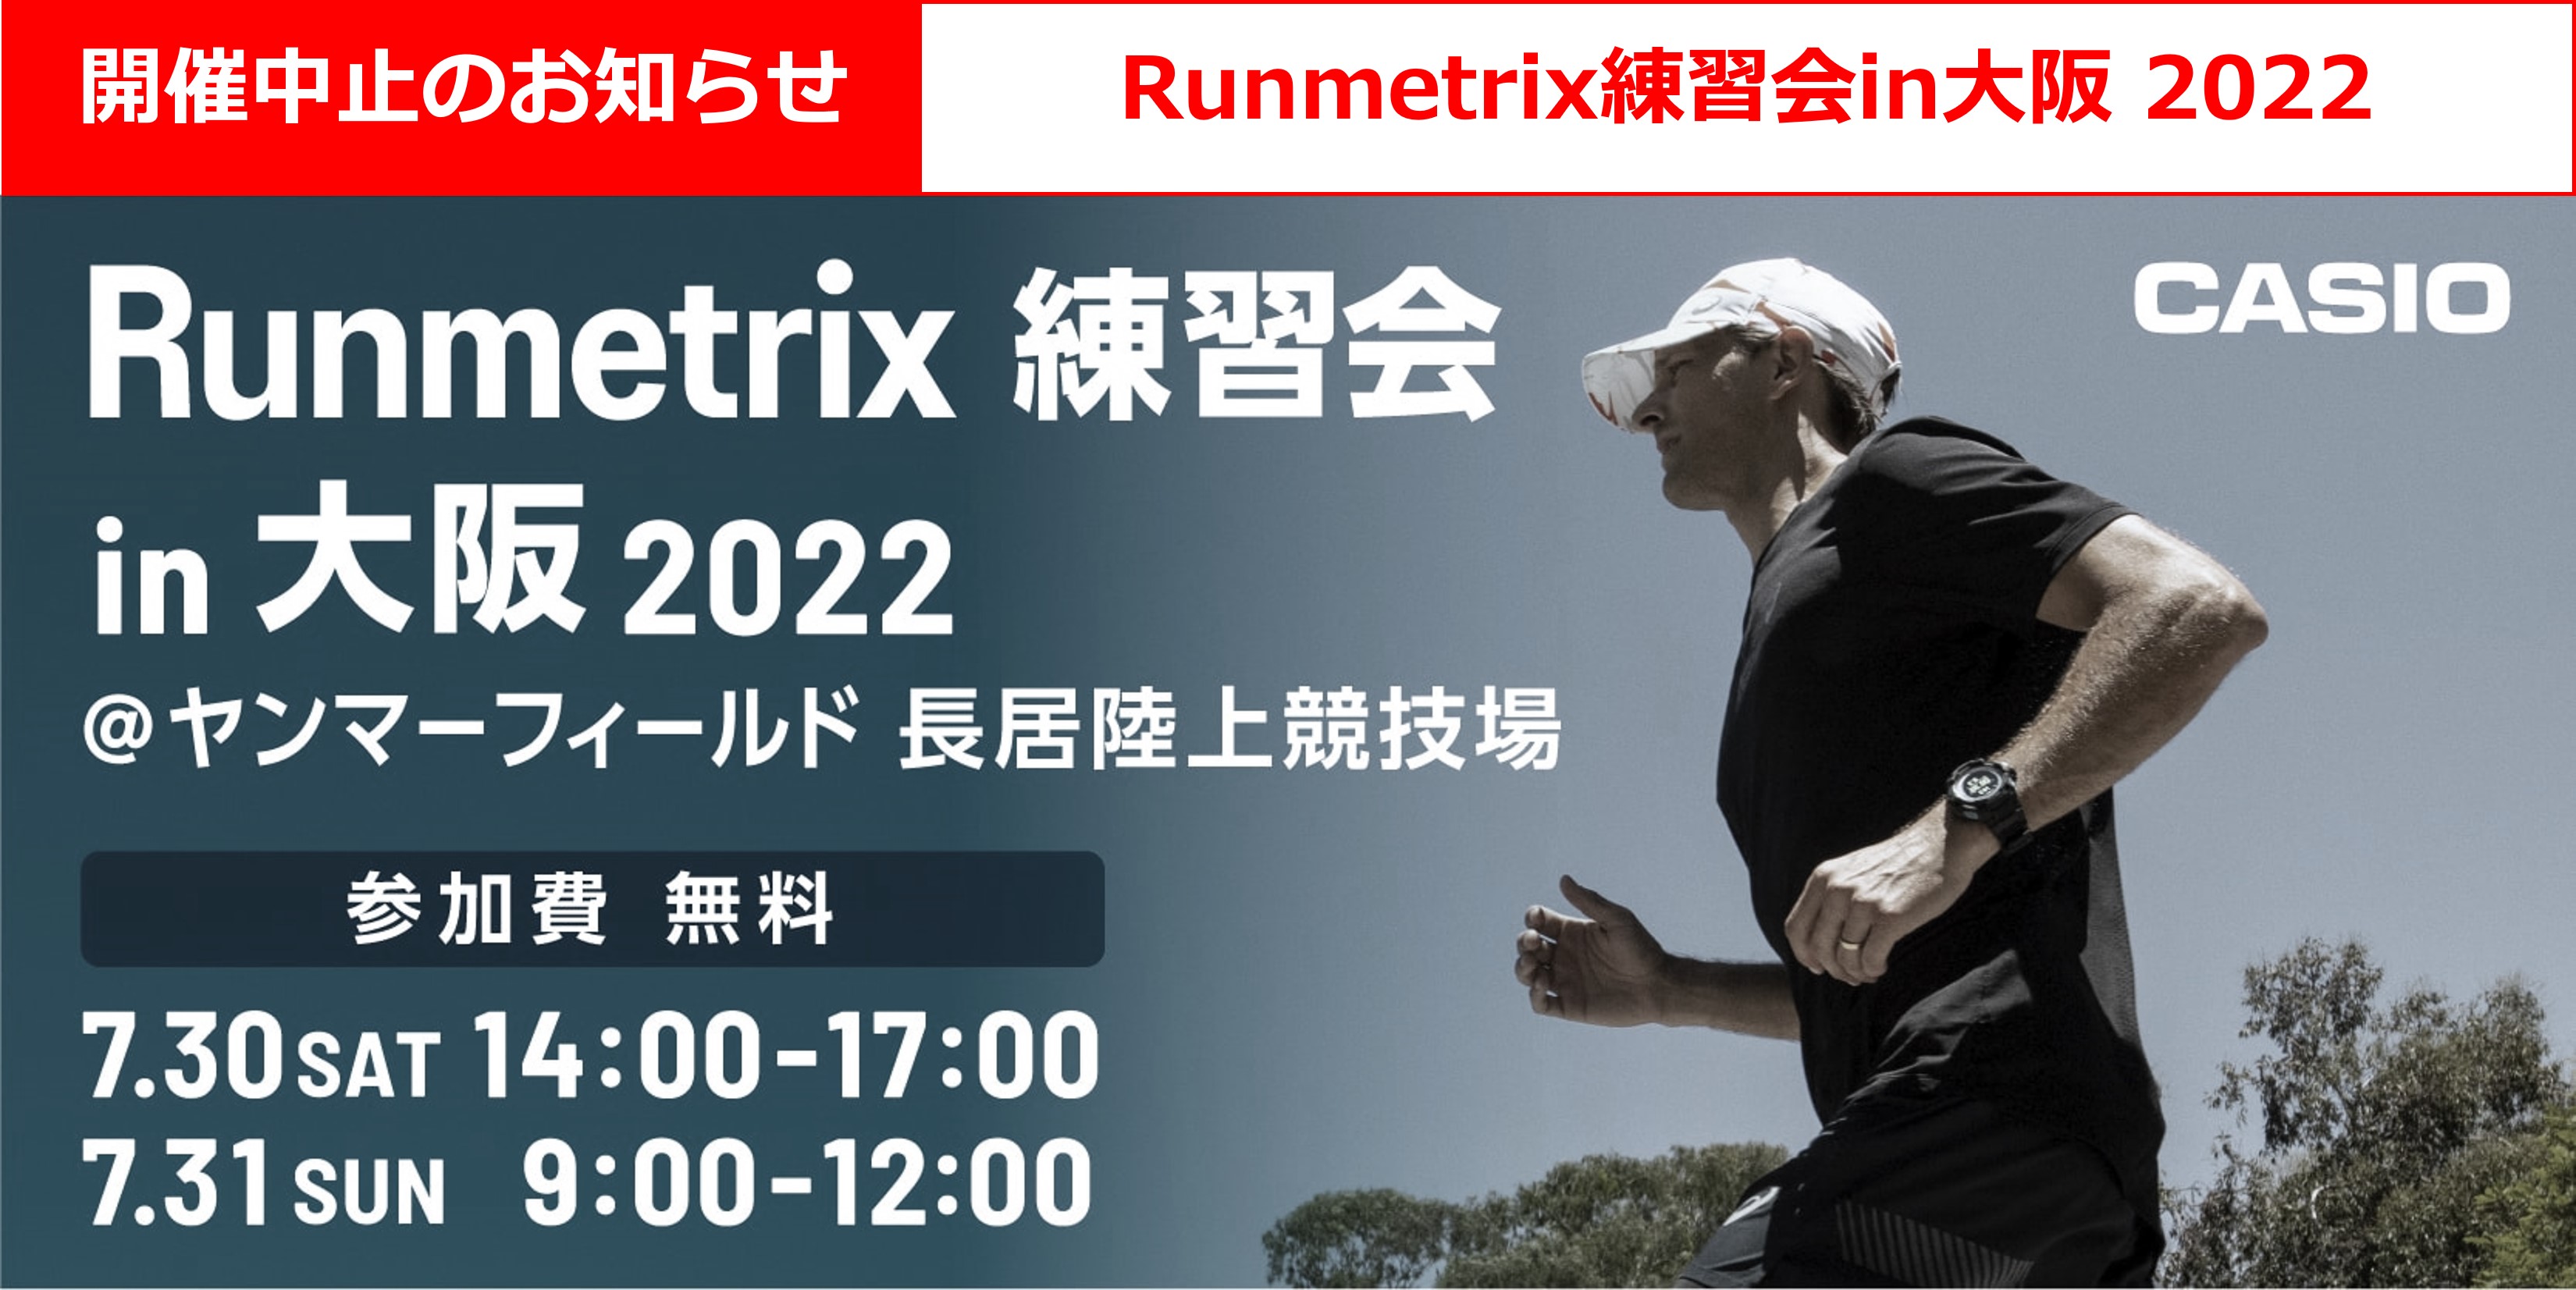 CASIO Runmetrix 練習会 in 大阪2022@ヤンマーフィールド 長居陸上競技場 7.30 SAT 14:00-17:00 7.31 SUN 9:00-12:00